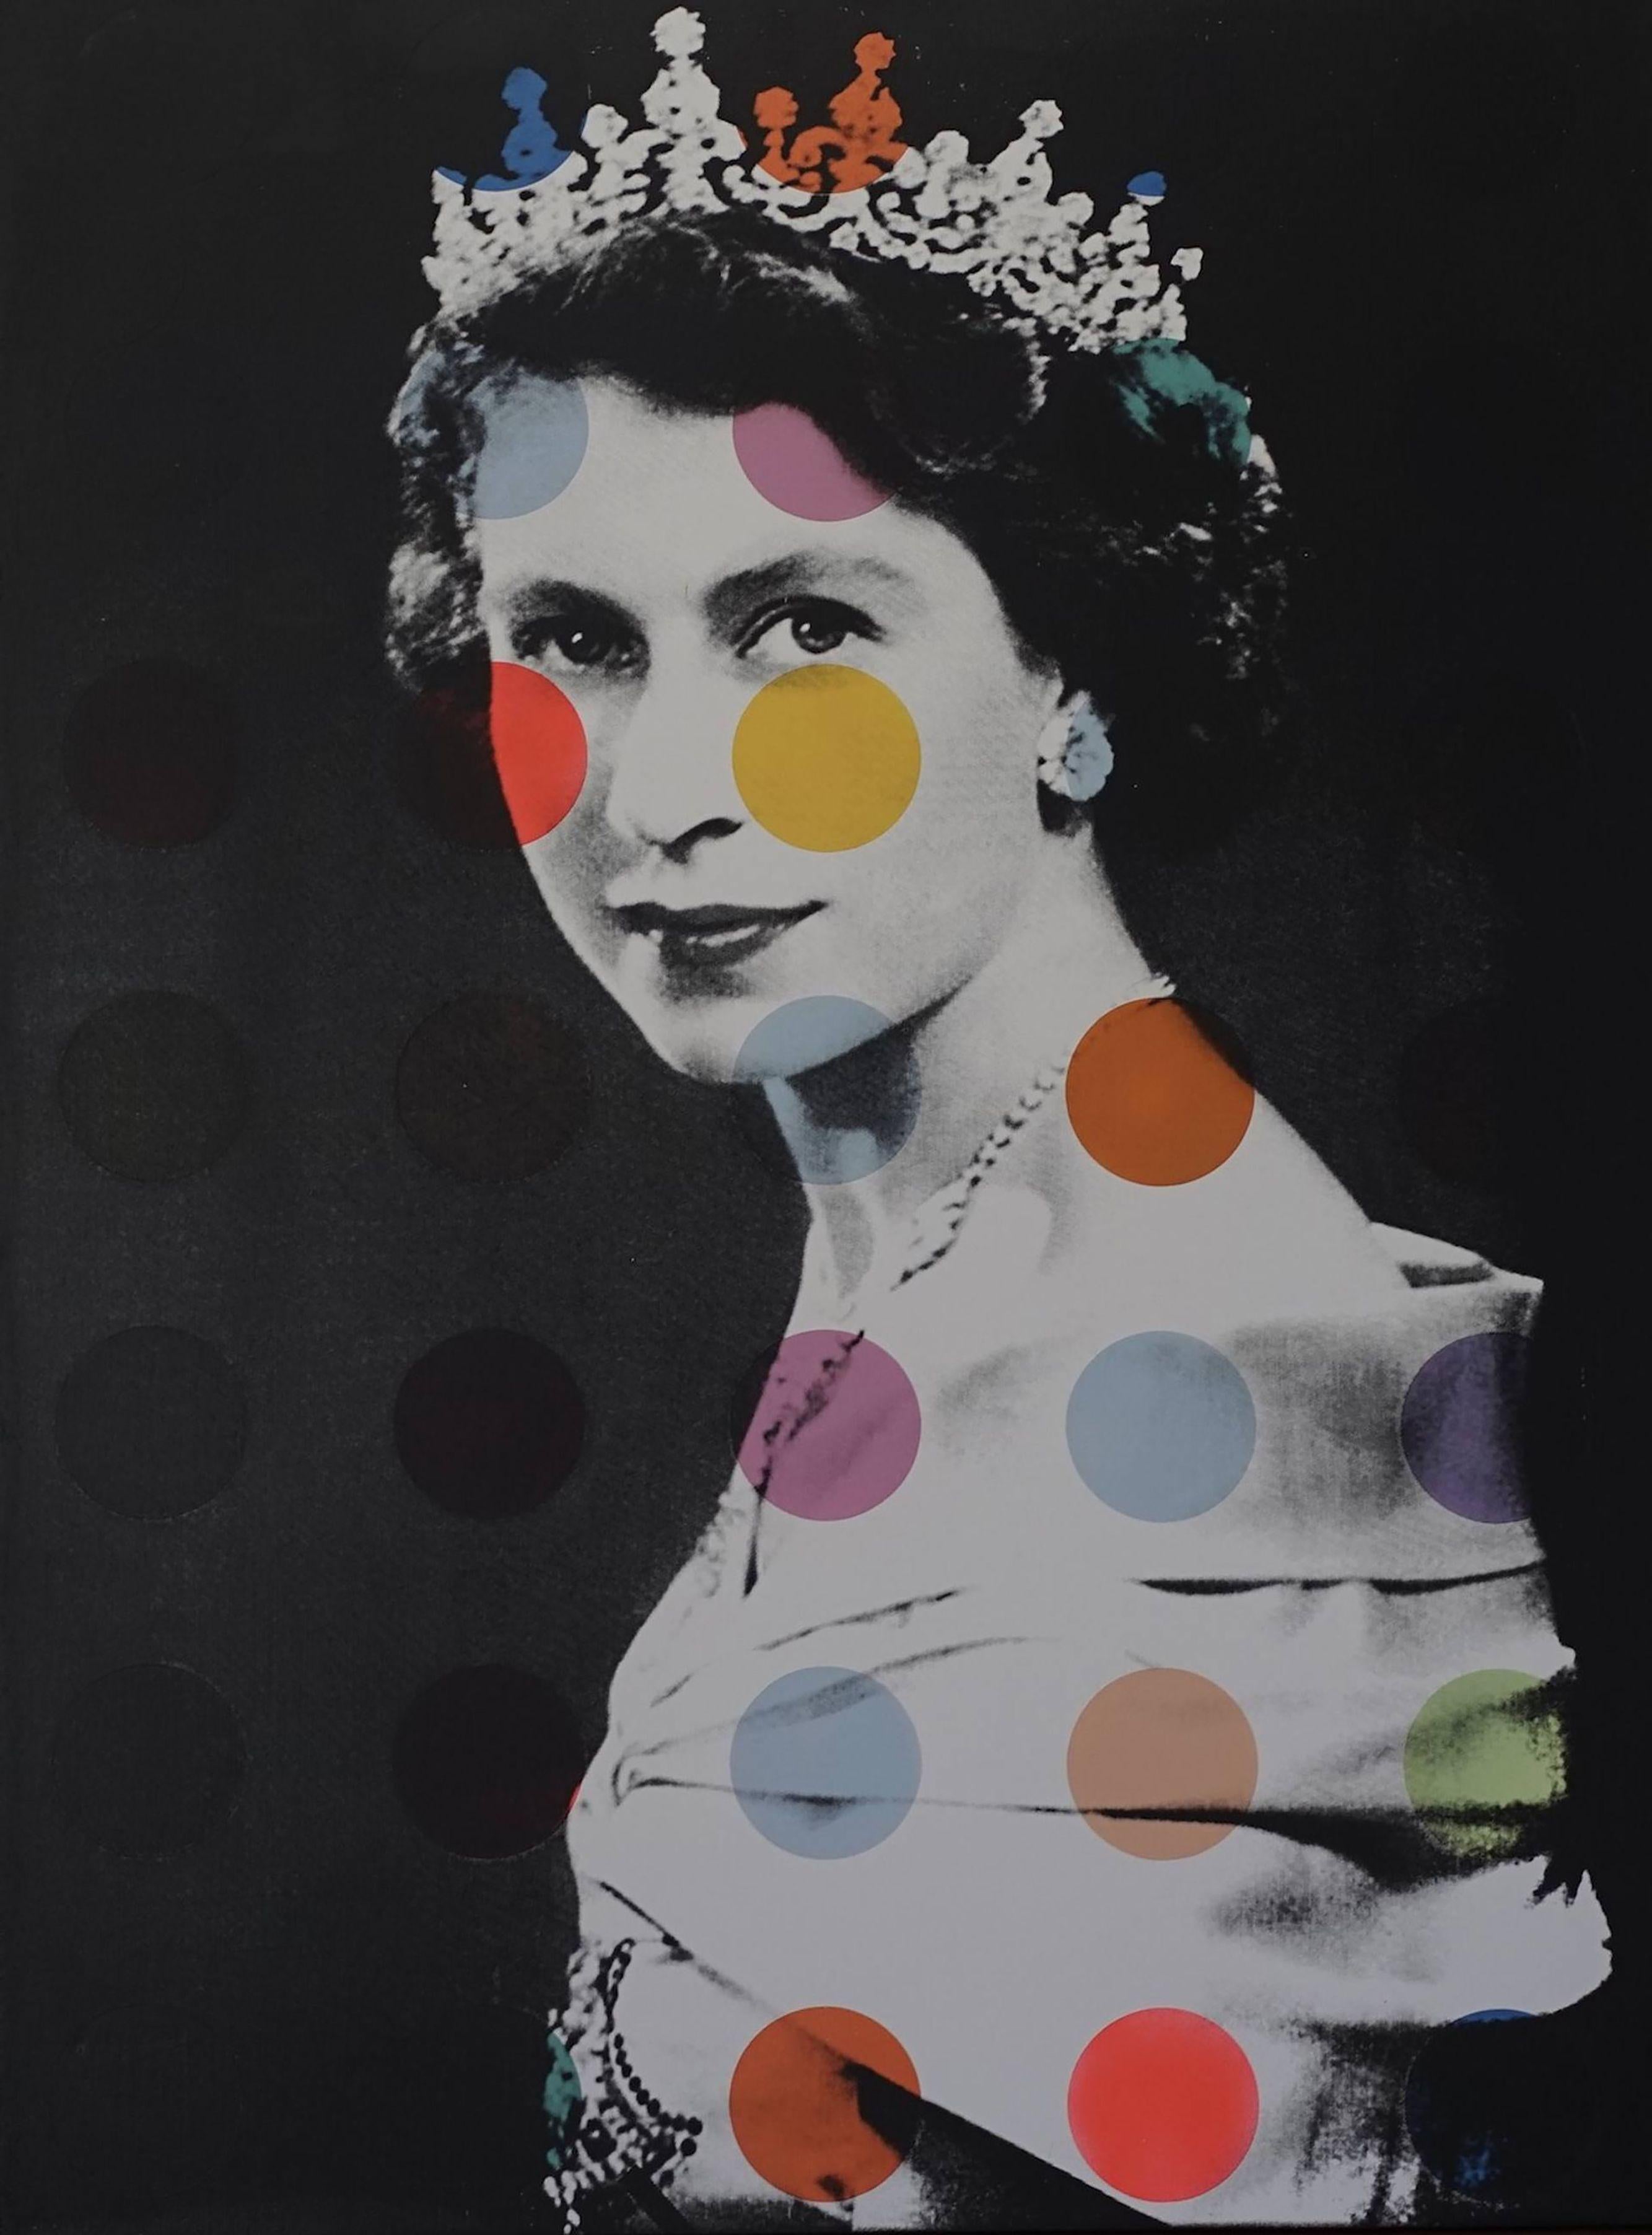 Queen Elizabeth II x Polka Dots, Mixed Media on Wood Panel - Mixed Media Art by Dane Shue